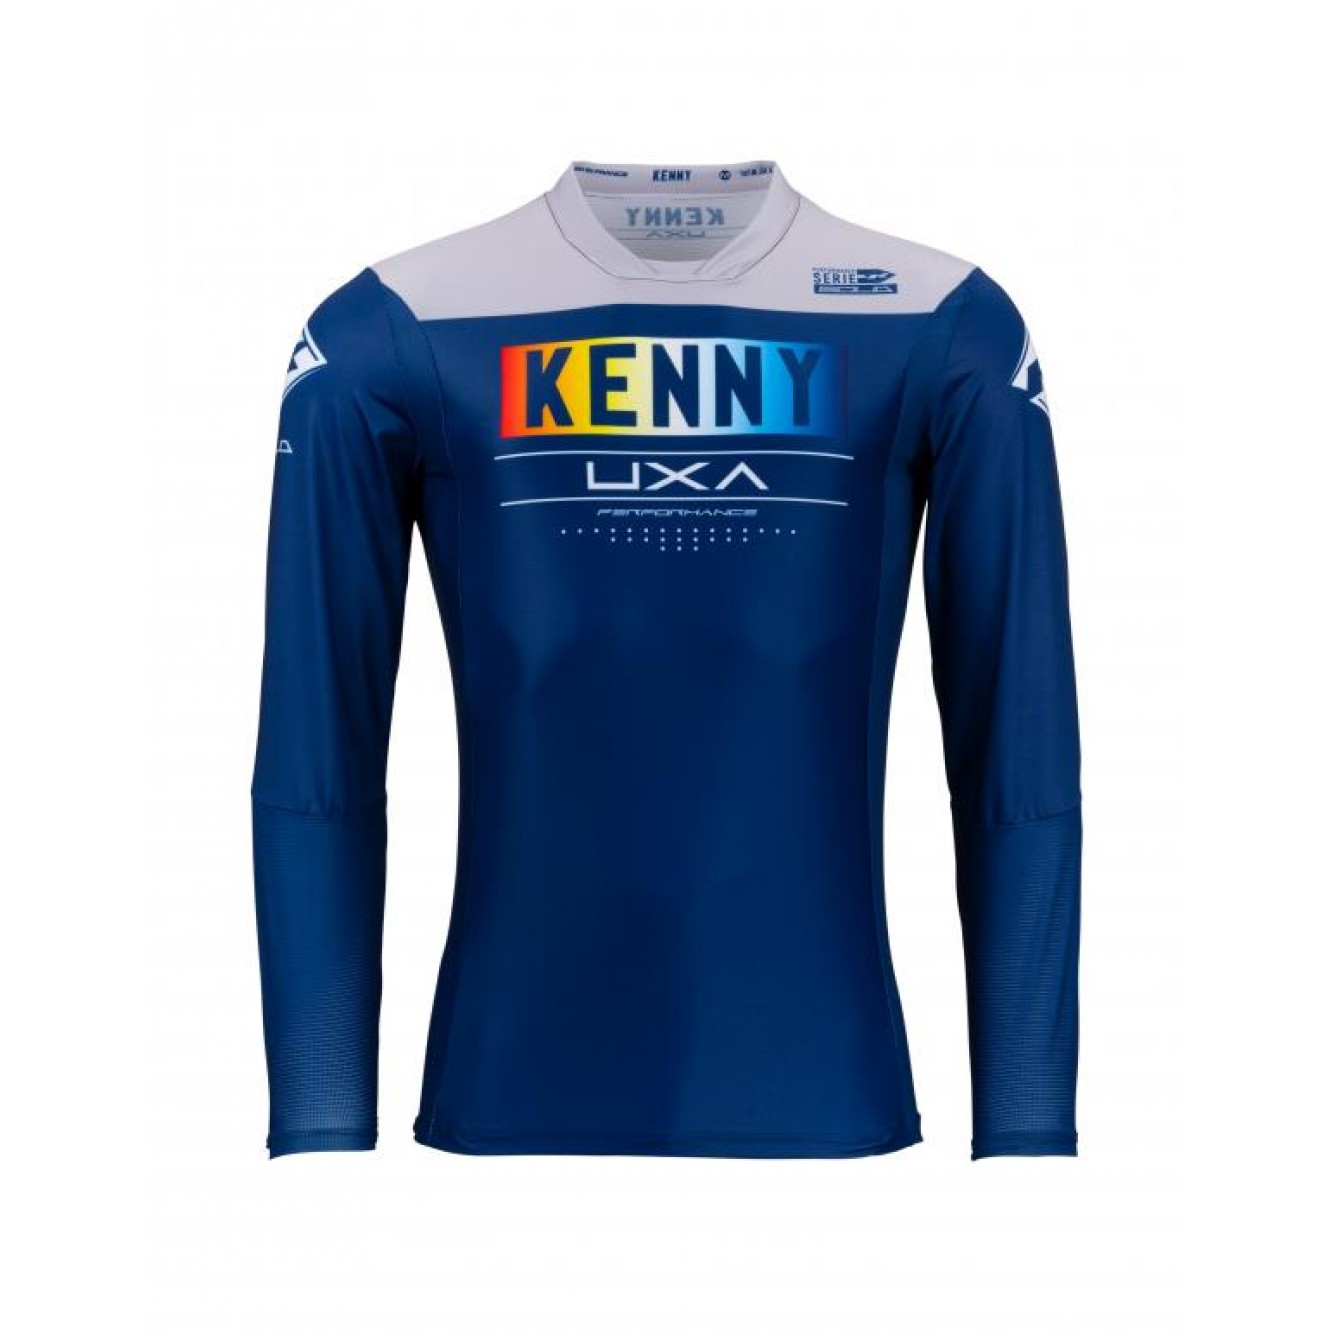 Kenny | Cross Shirt Performance Grijs / Blauw